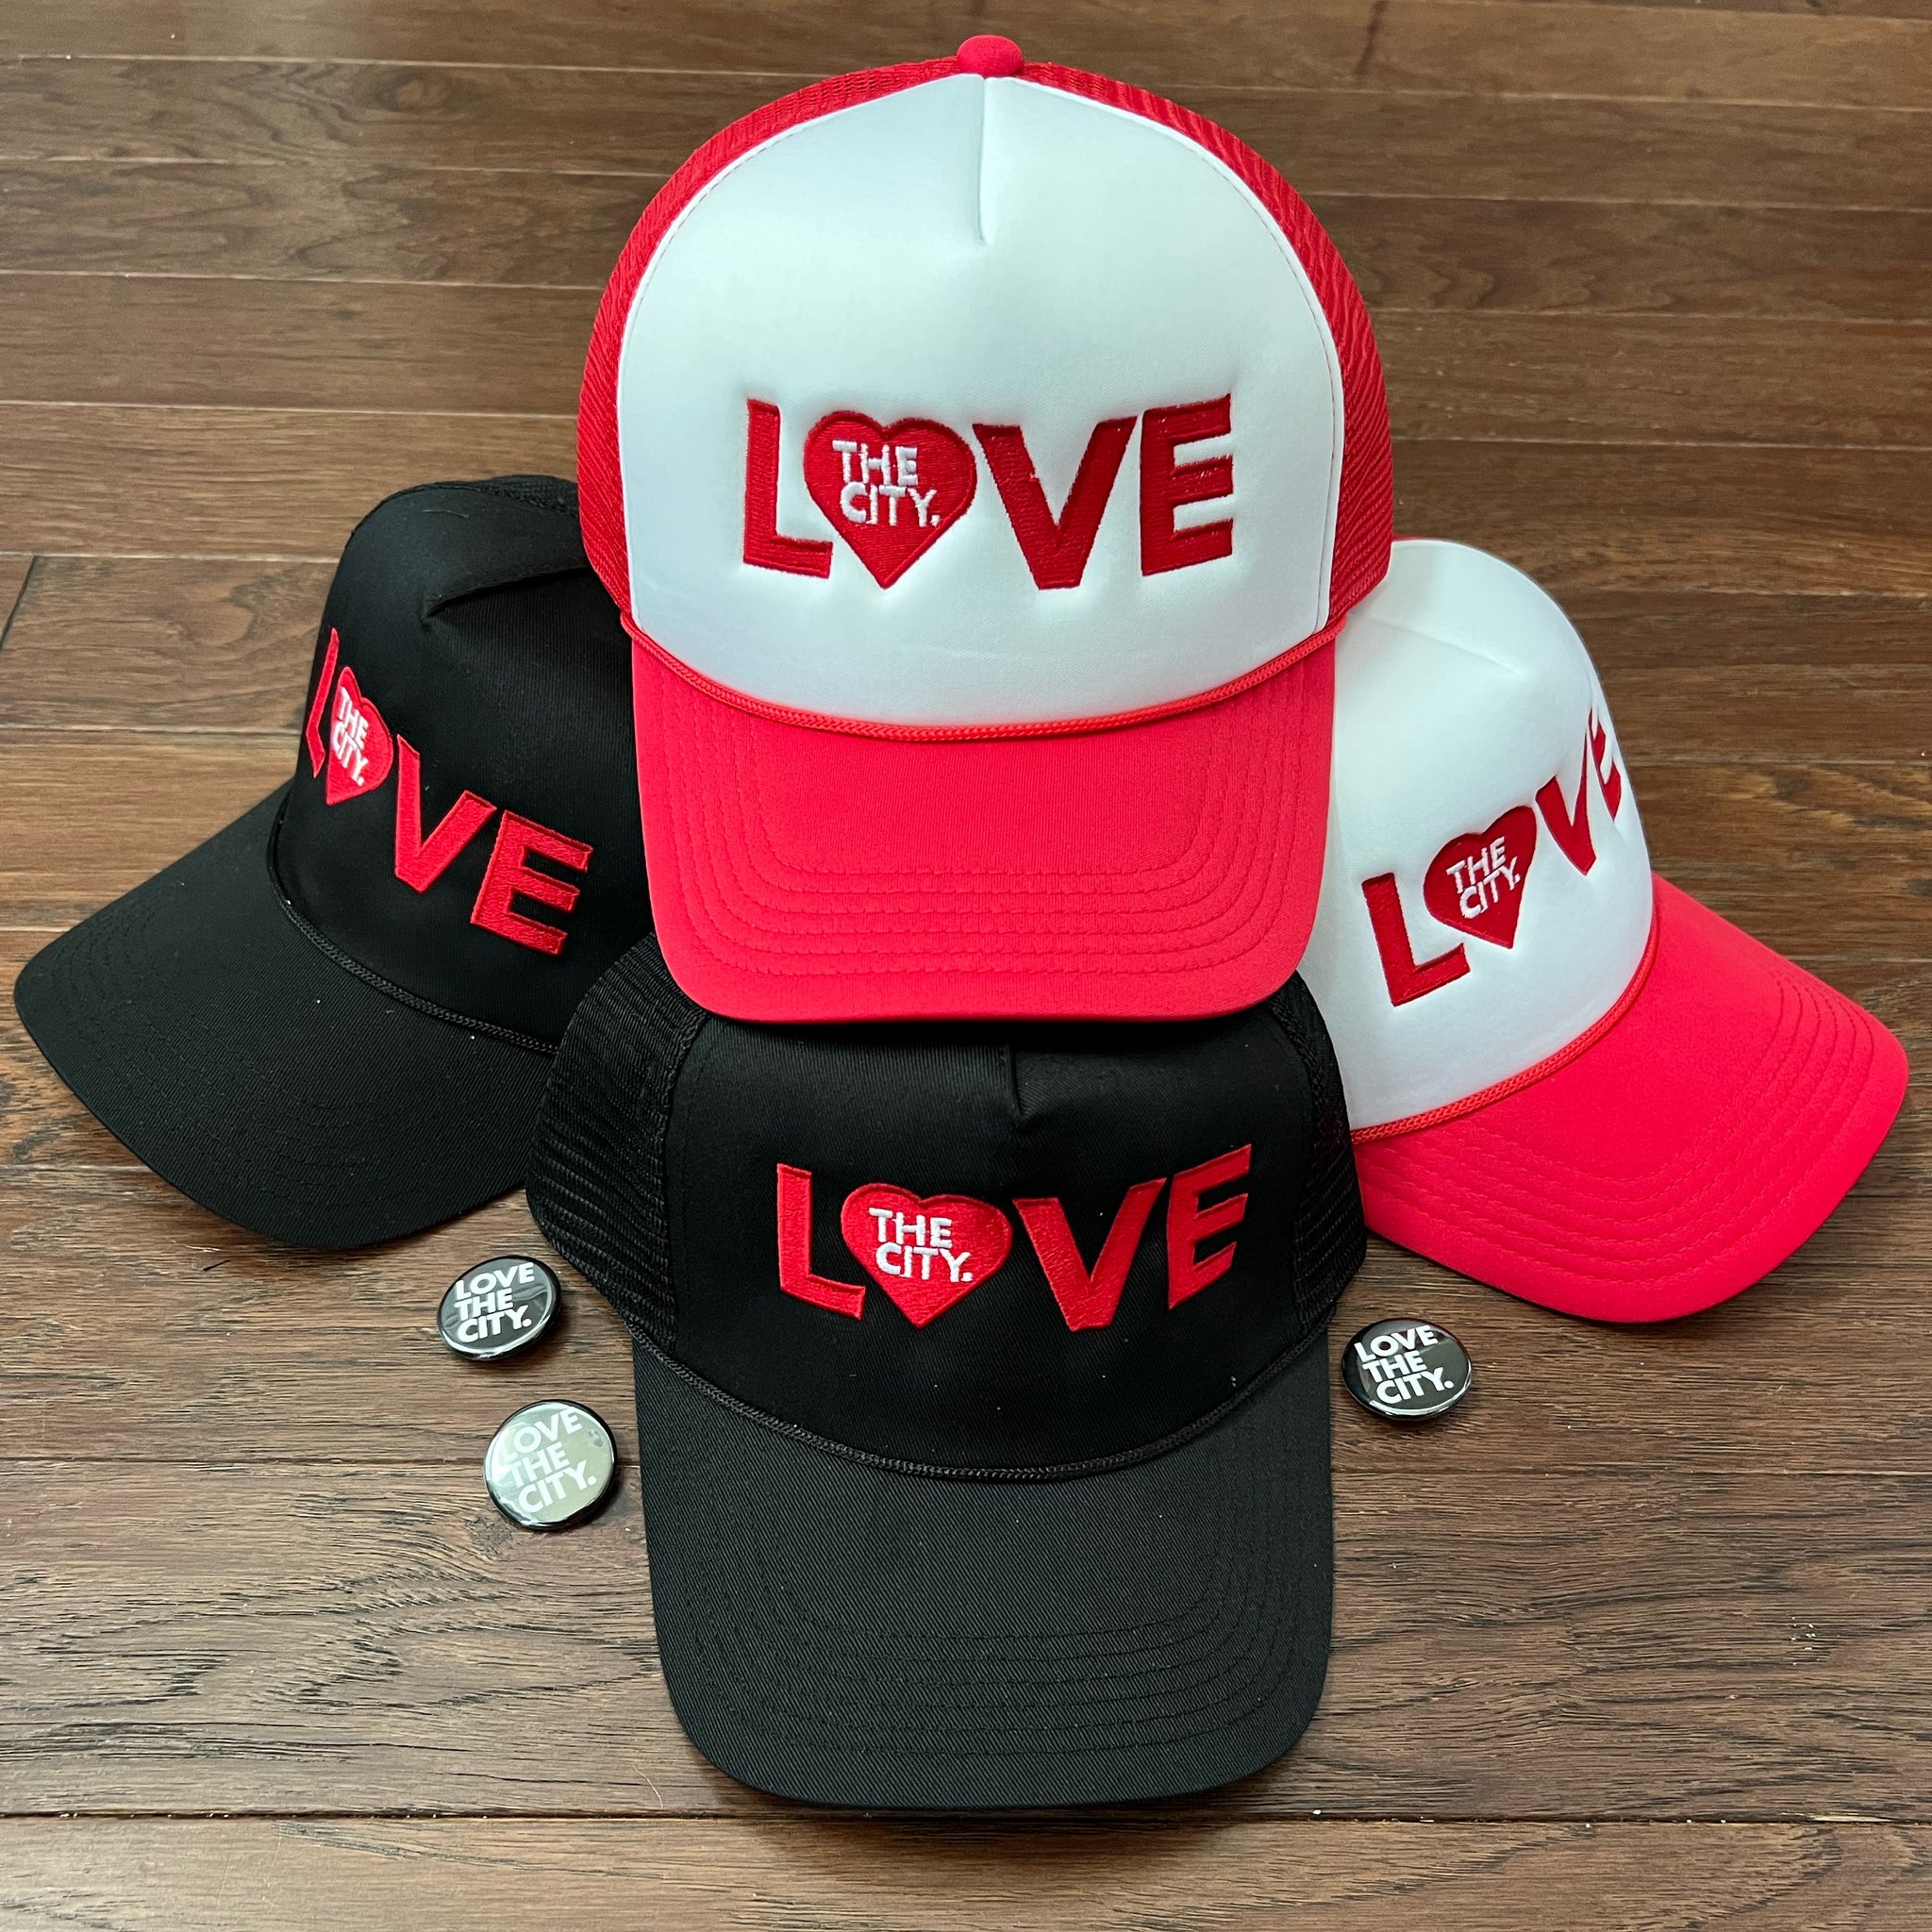 Big Love Trucker Hat